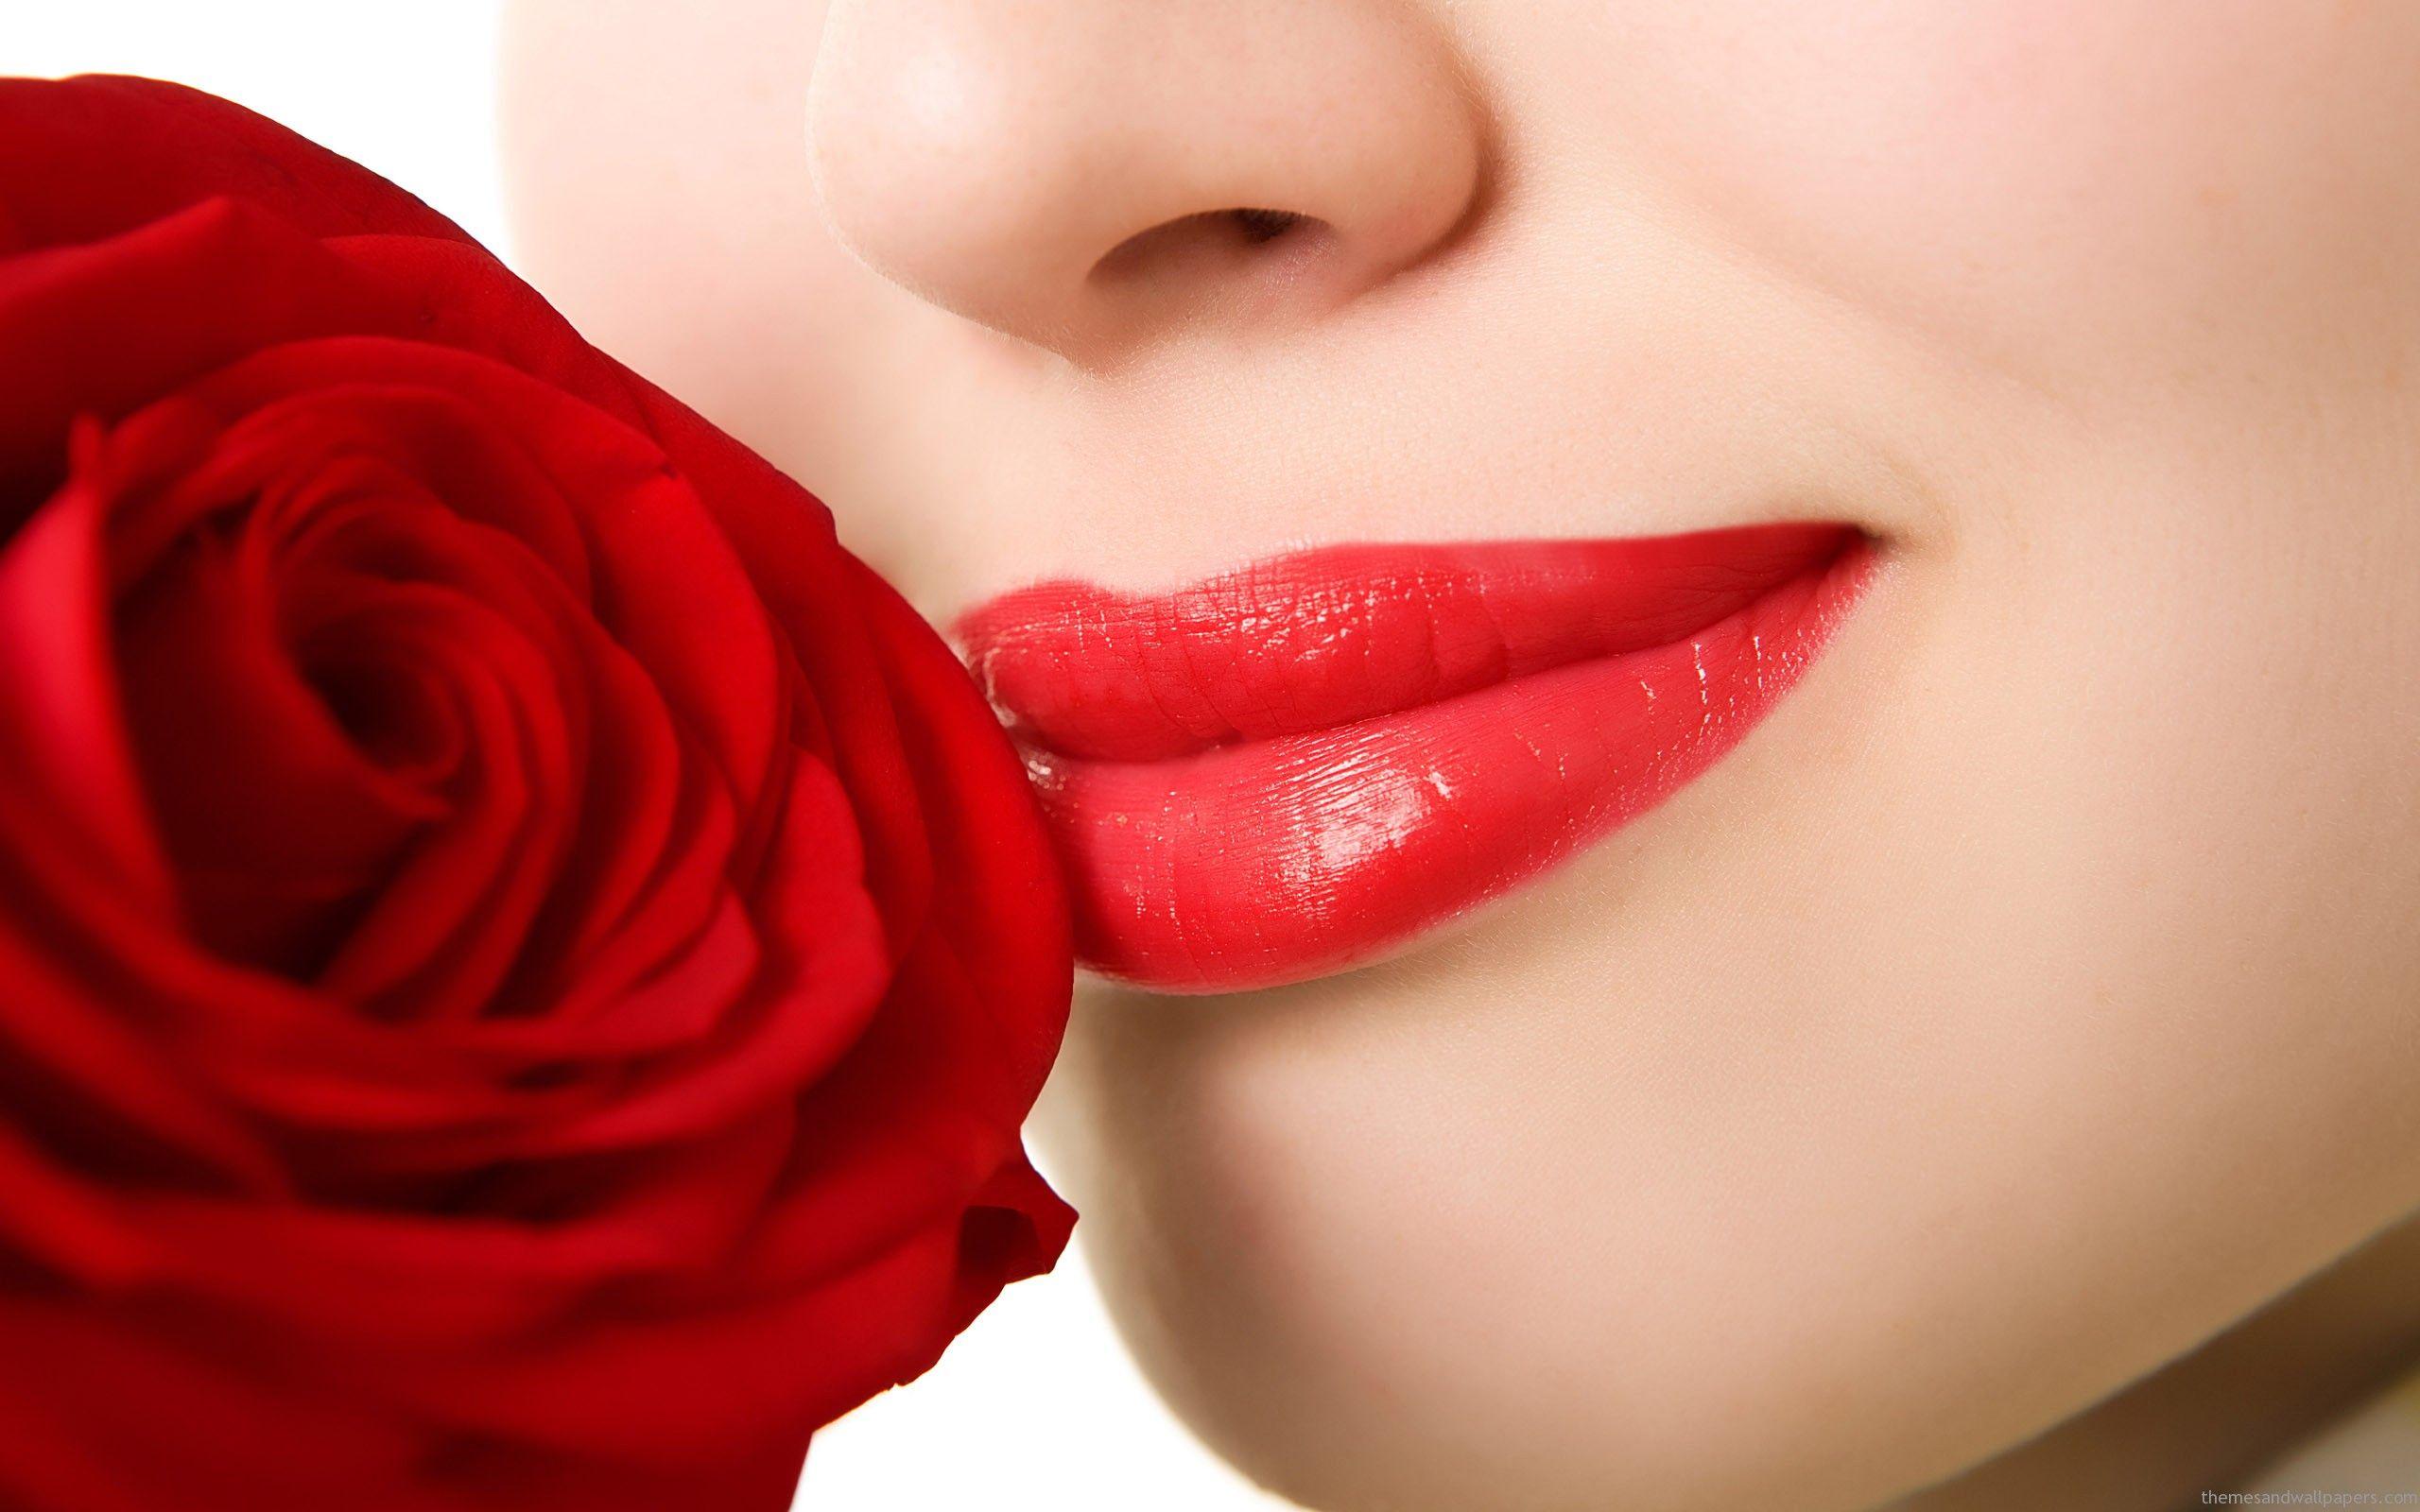 Flowers Red Rose & Red Lips wallpaper Desktop, Phone, Tablet